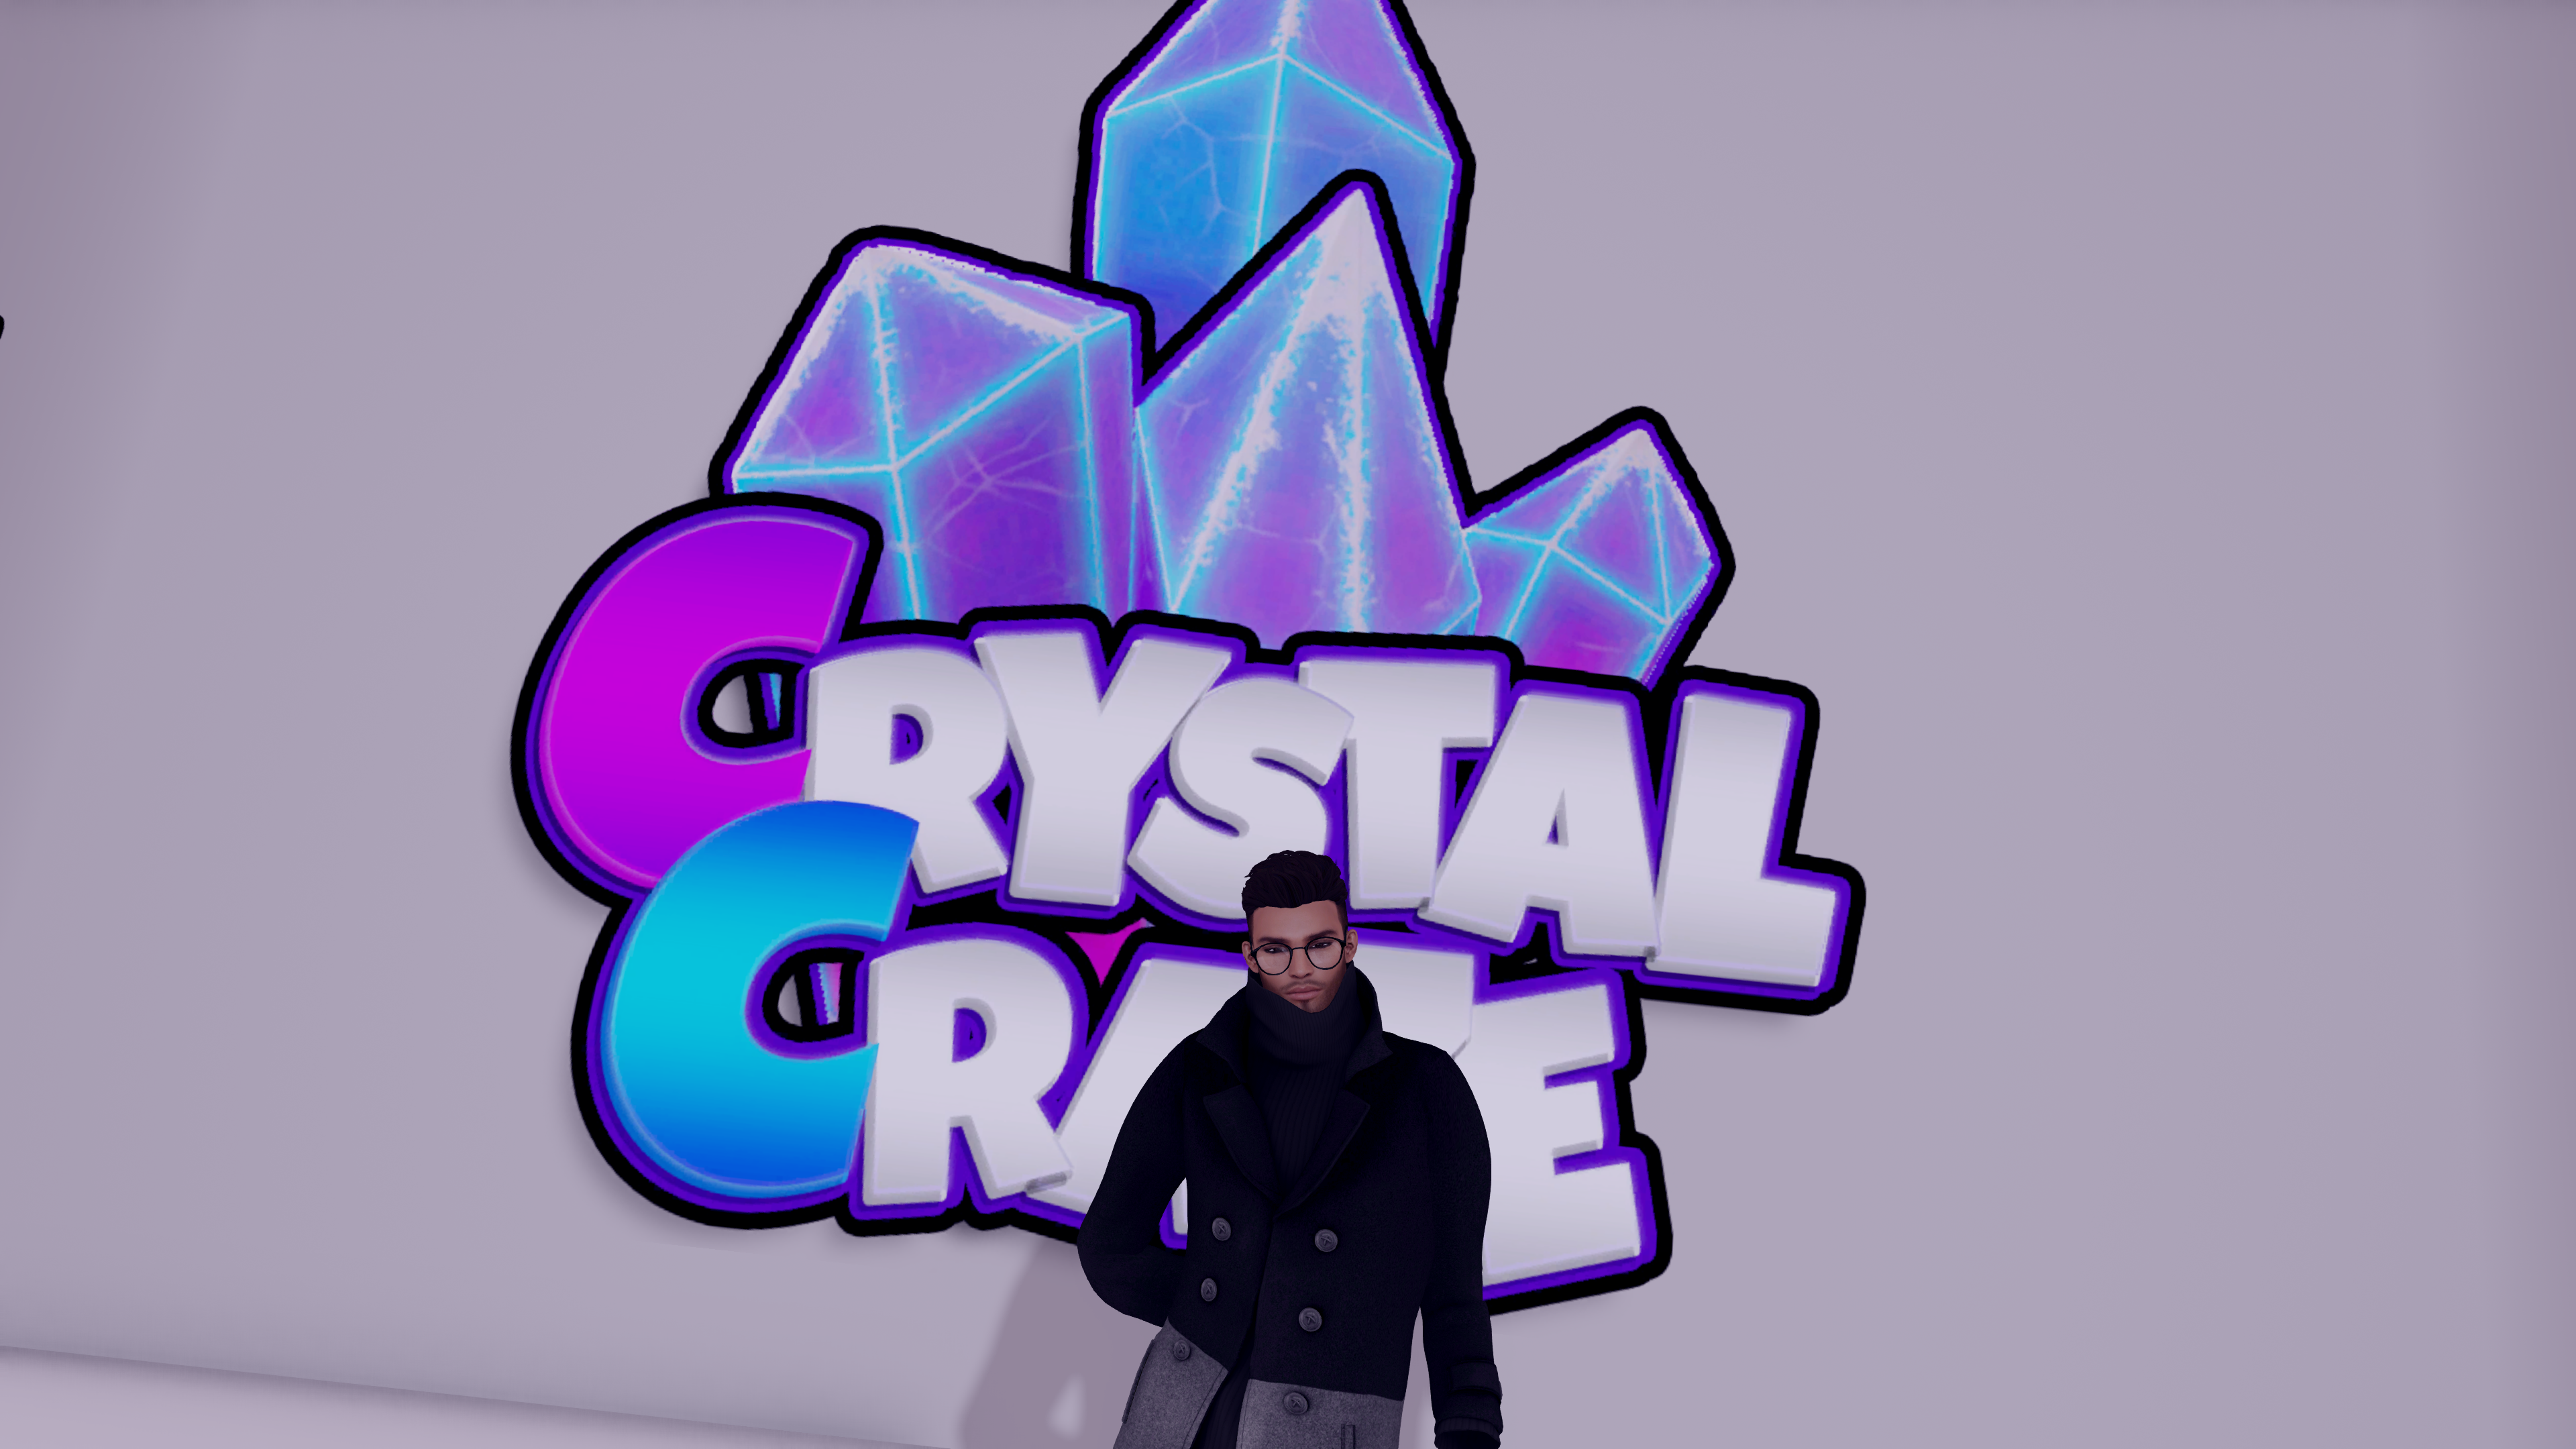 crystalcraze_hq_01.png